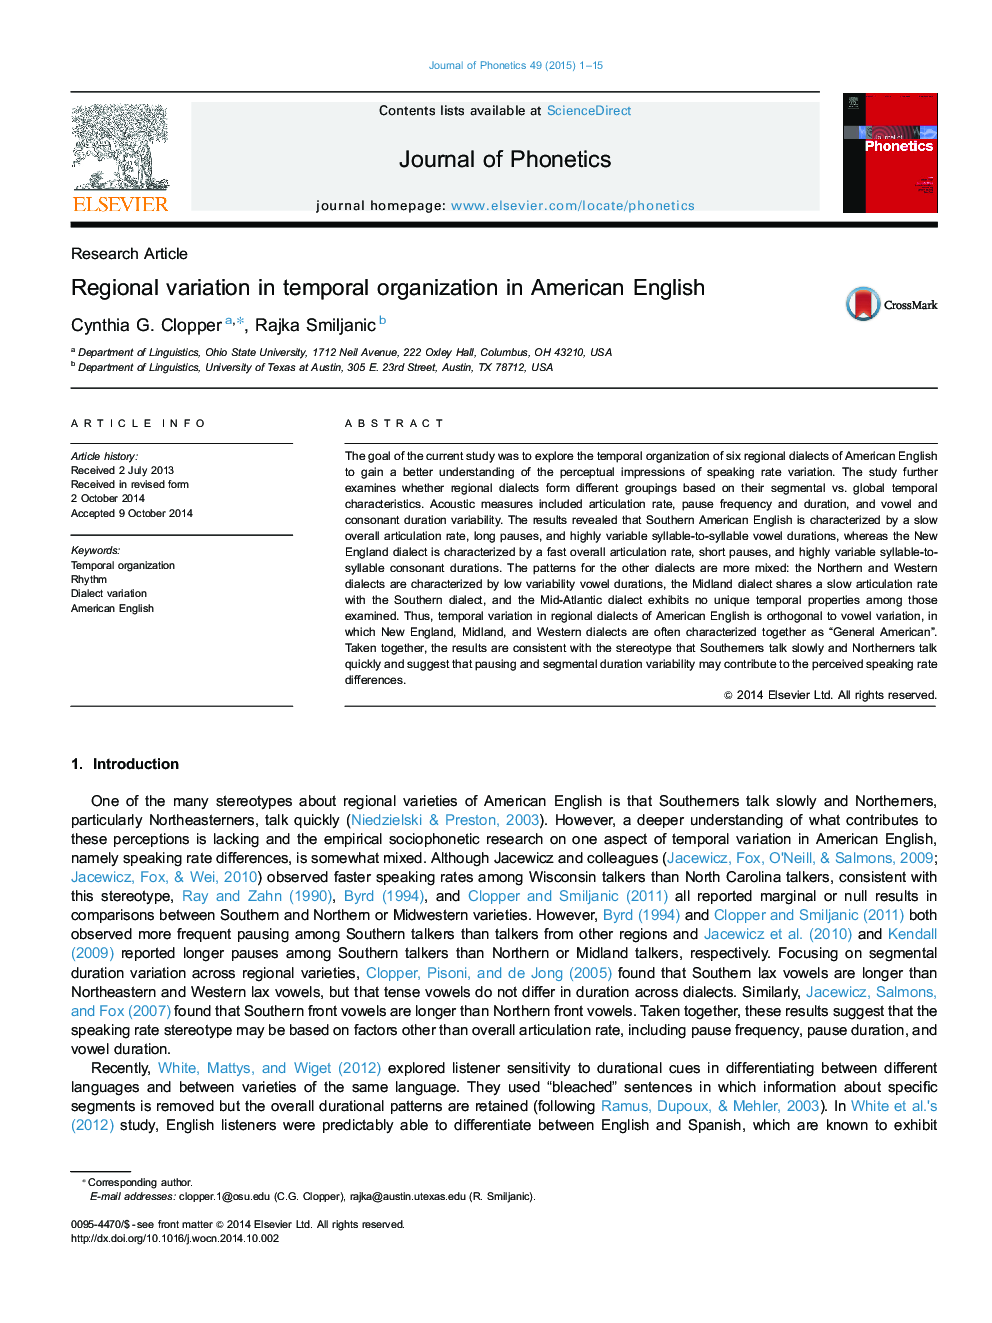 Regional variation in temporal organization in American English